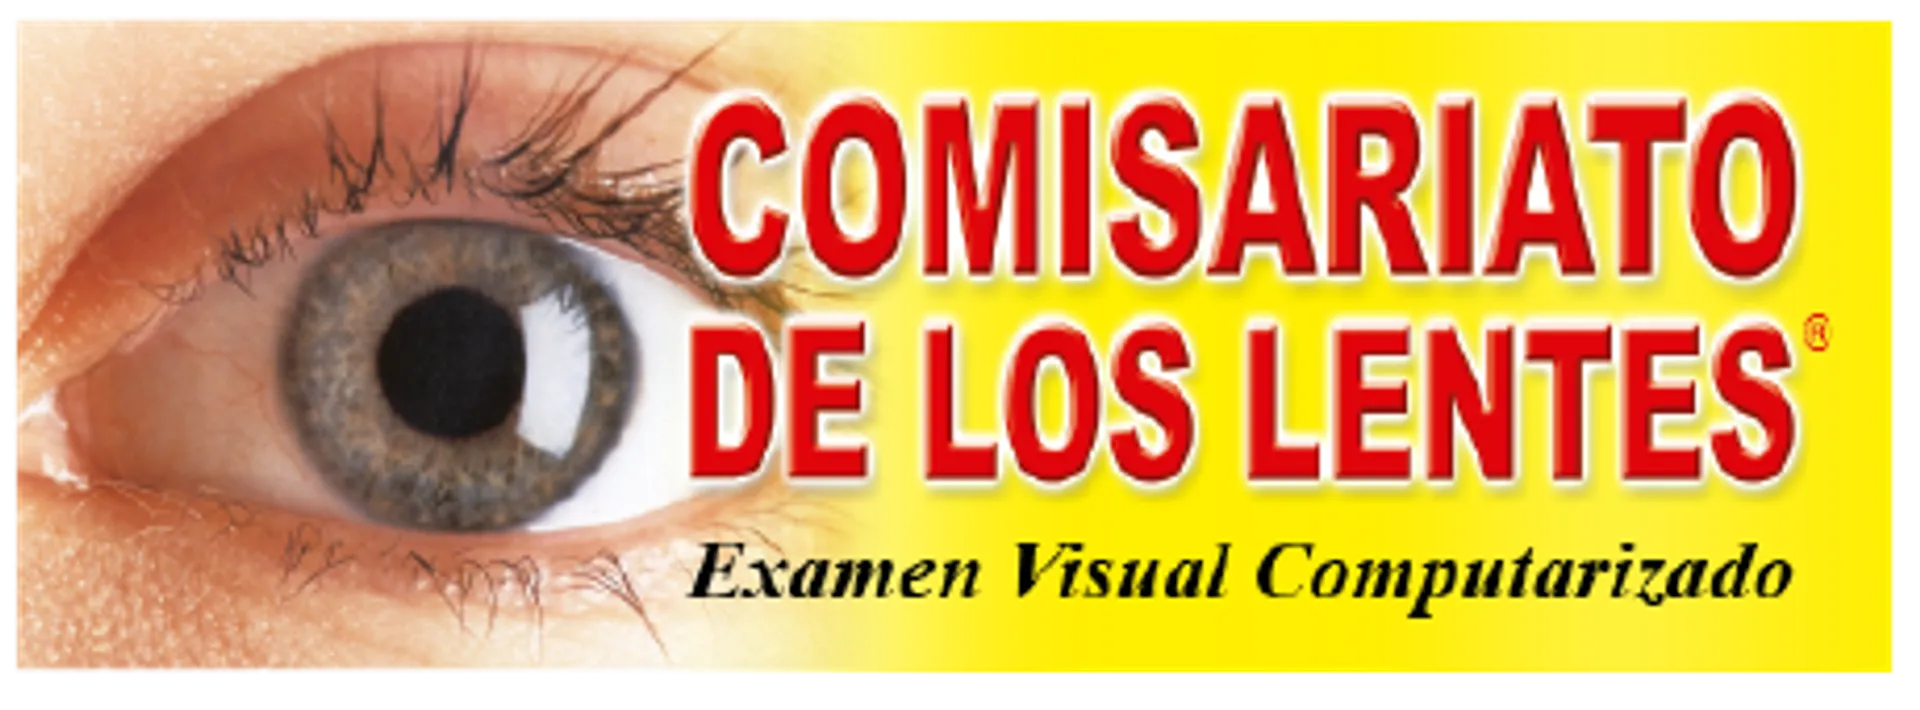 COMISARIATO DE LOS LENTES logo de catálogo